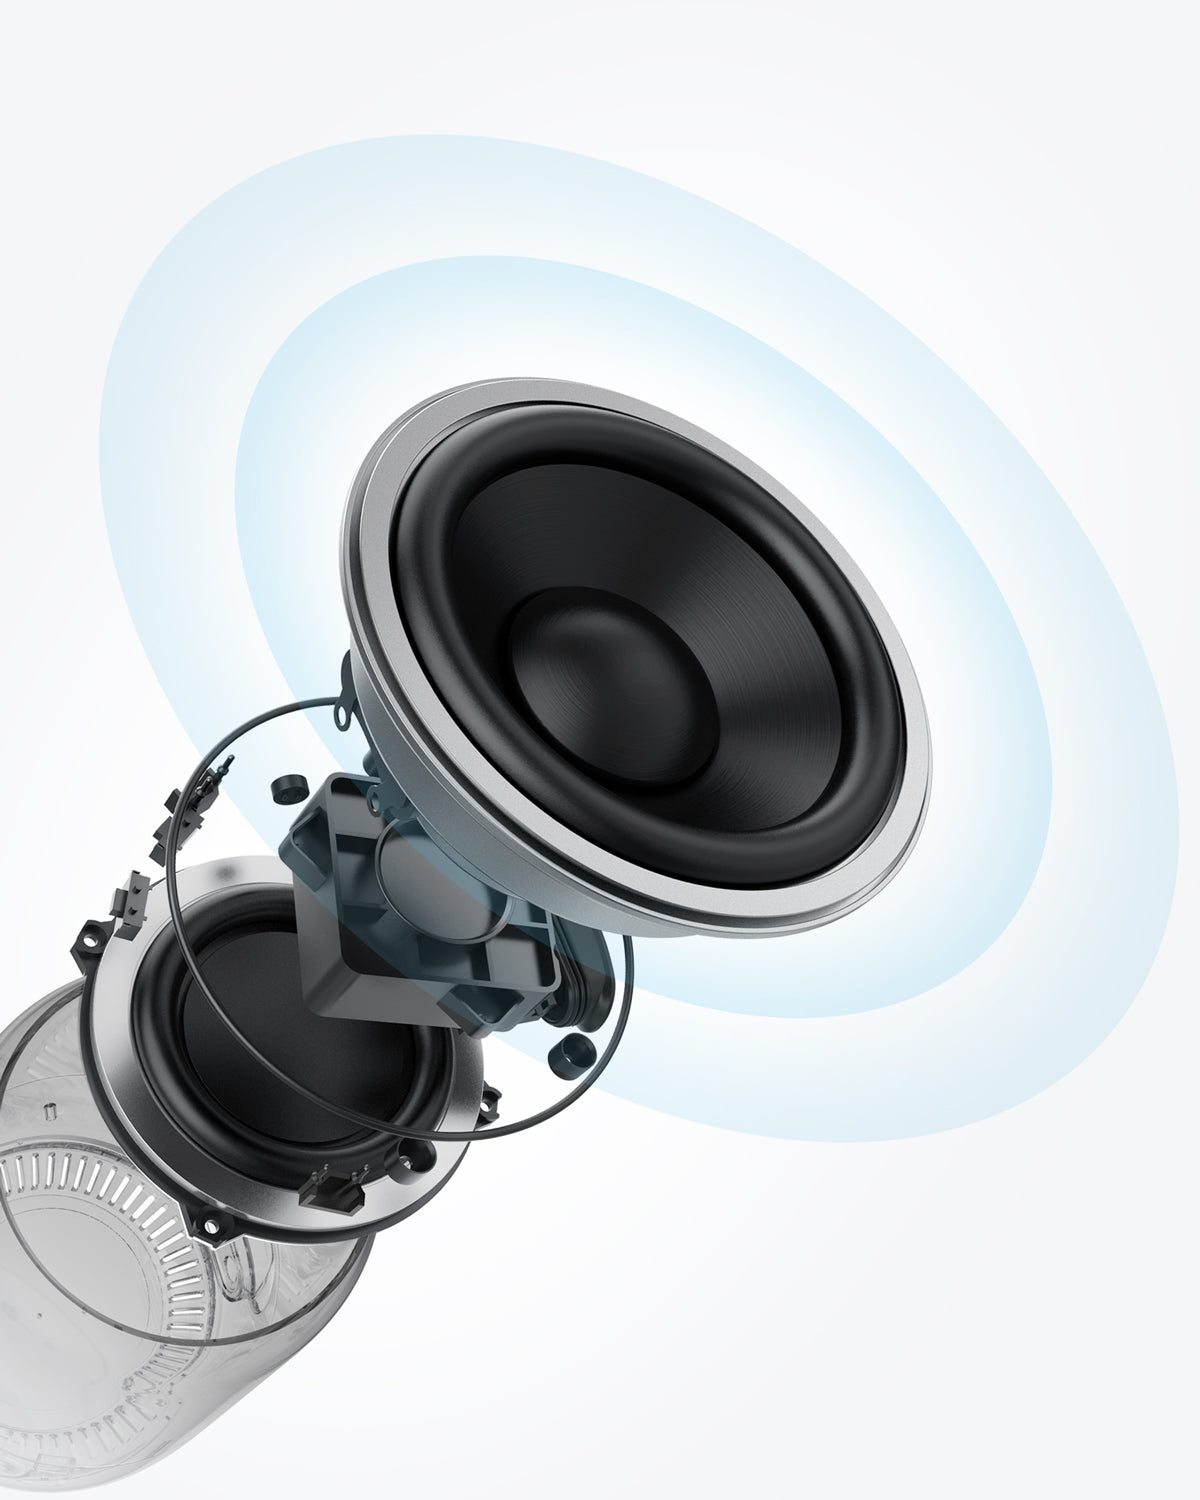 Anker SoundCore Mini 2 Wireless Bluetooth Speaker - Red